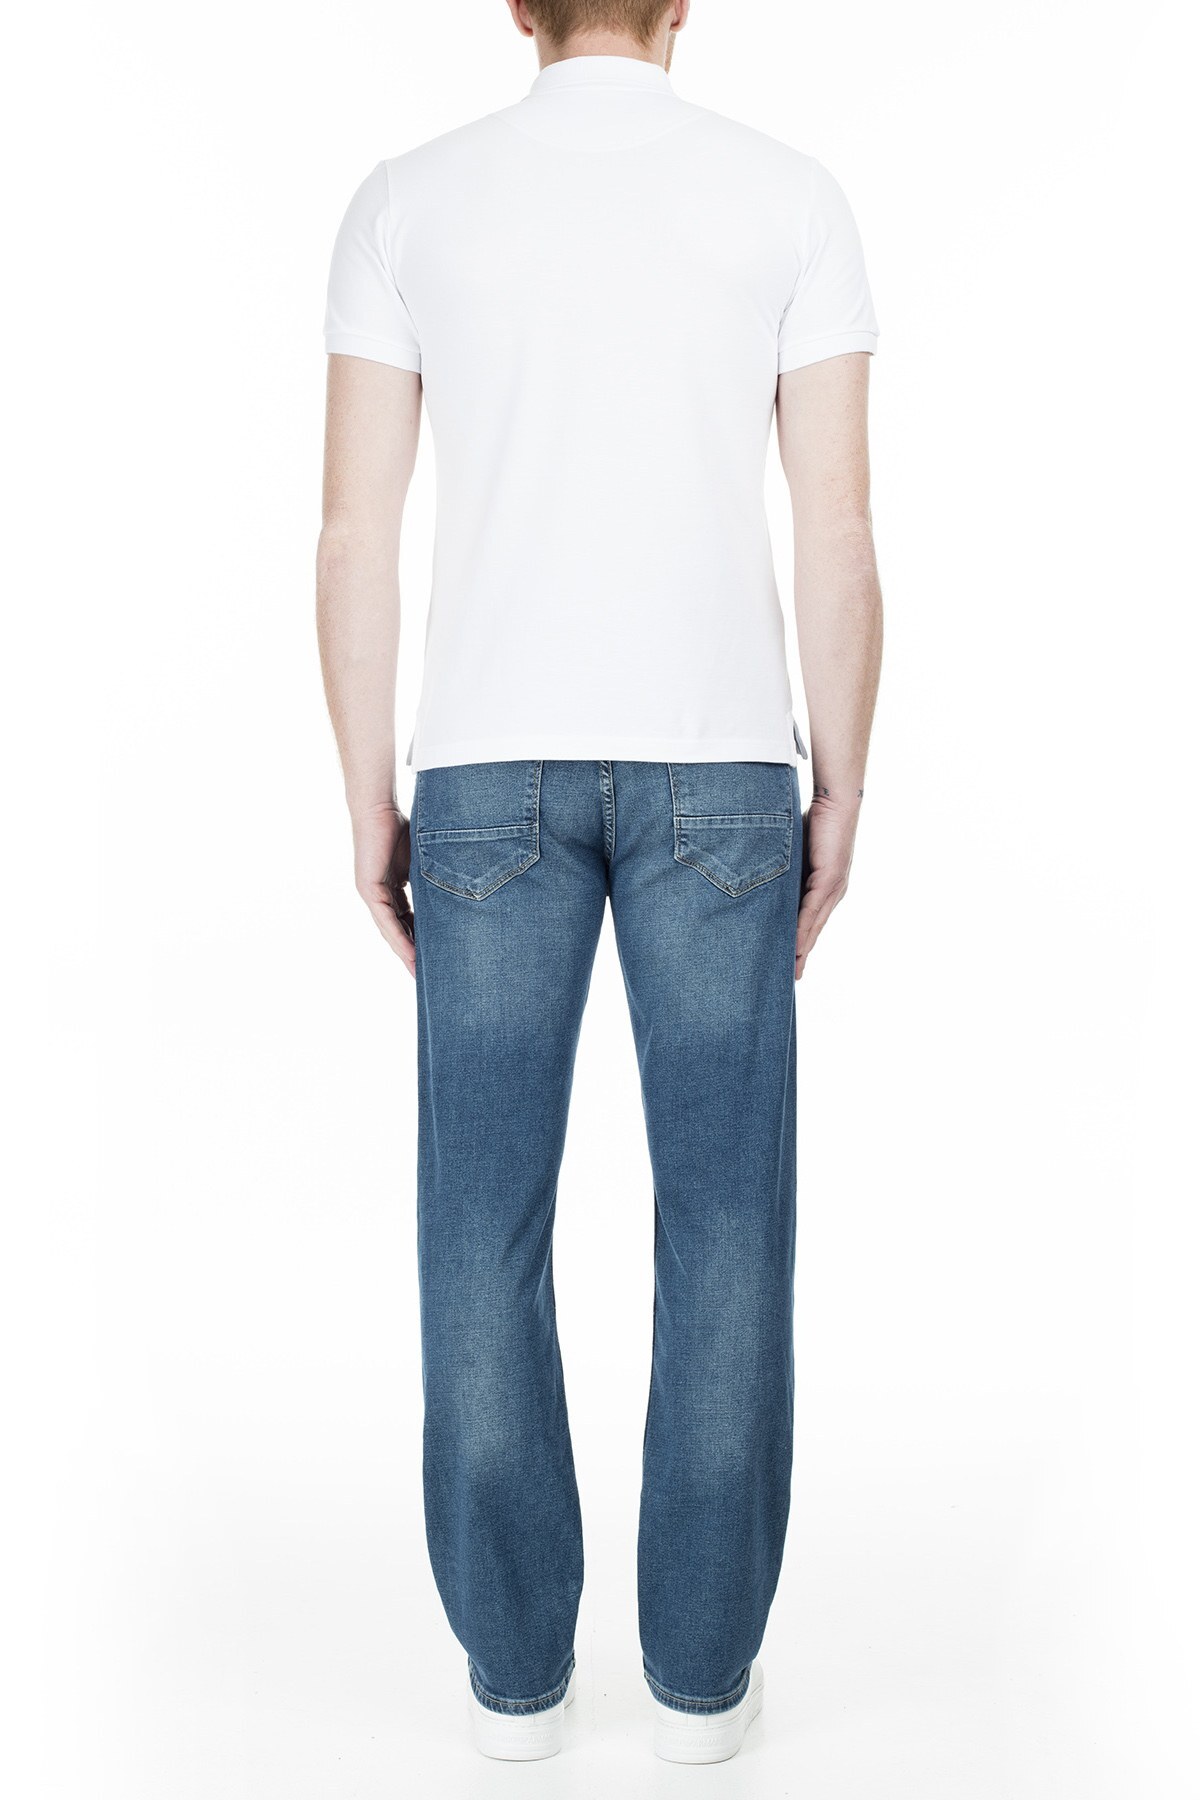 Exxe Jeans Erkek Kot Pantolon 7400G810KING LACİVERT